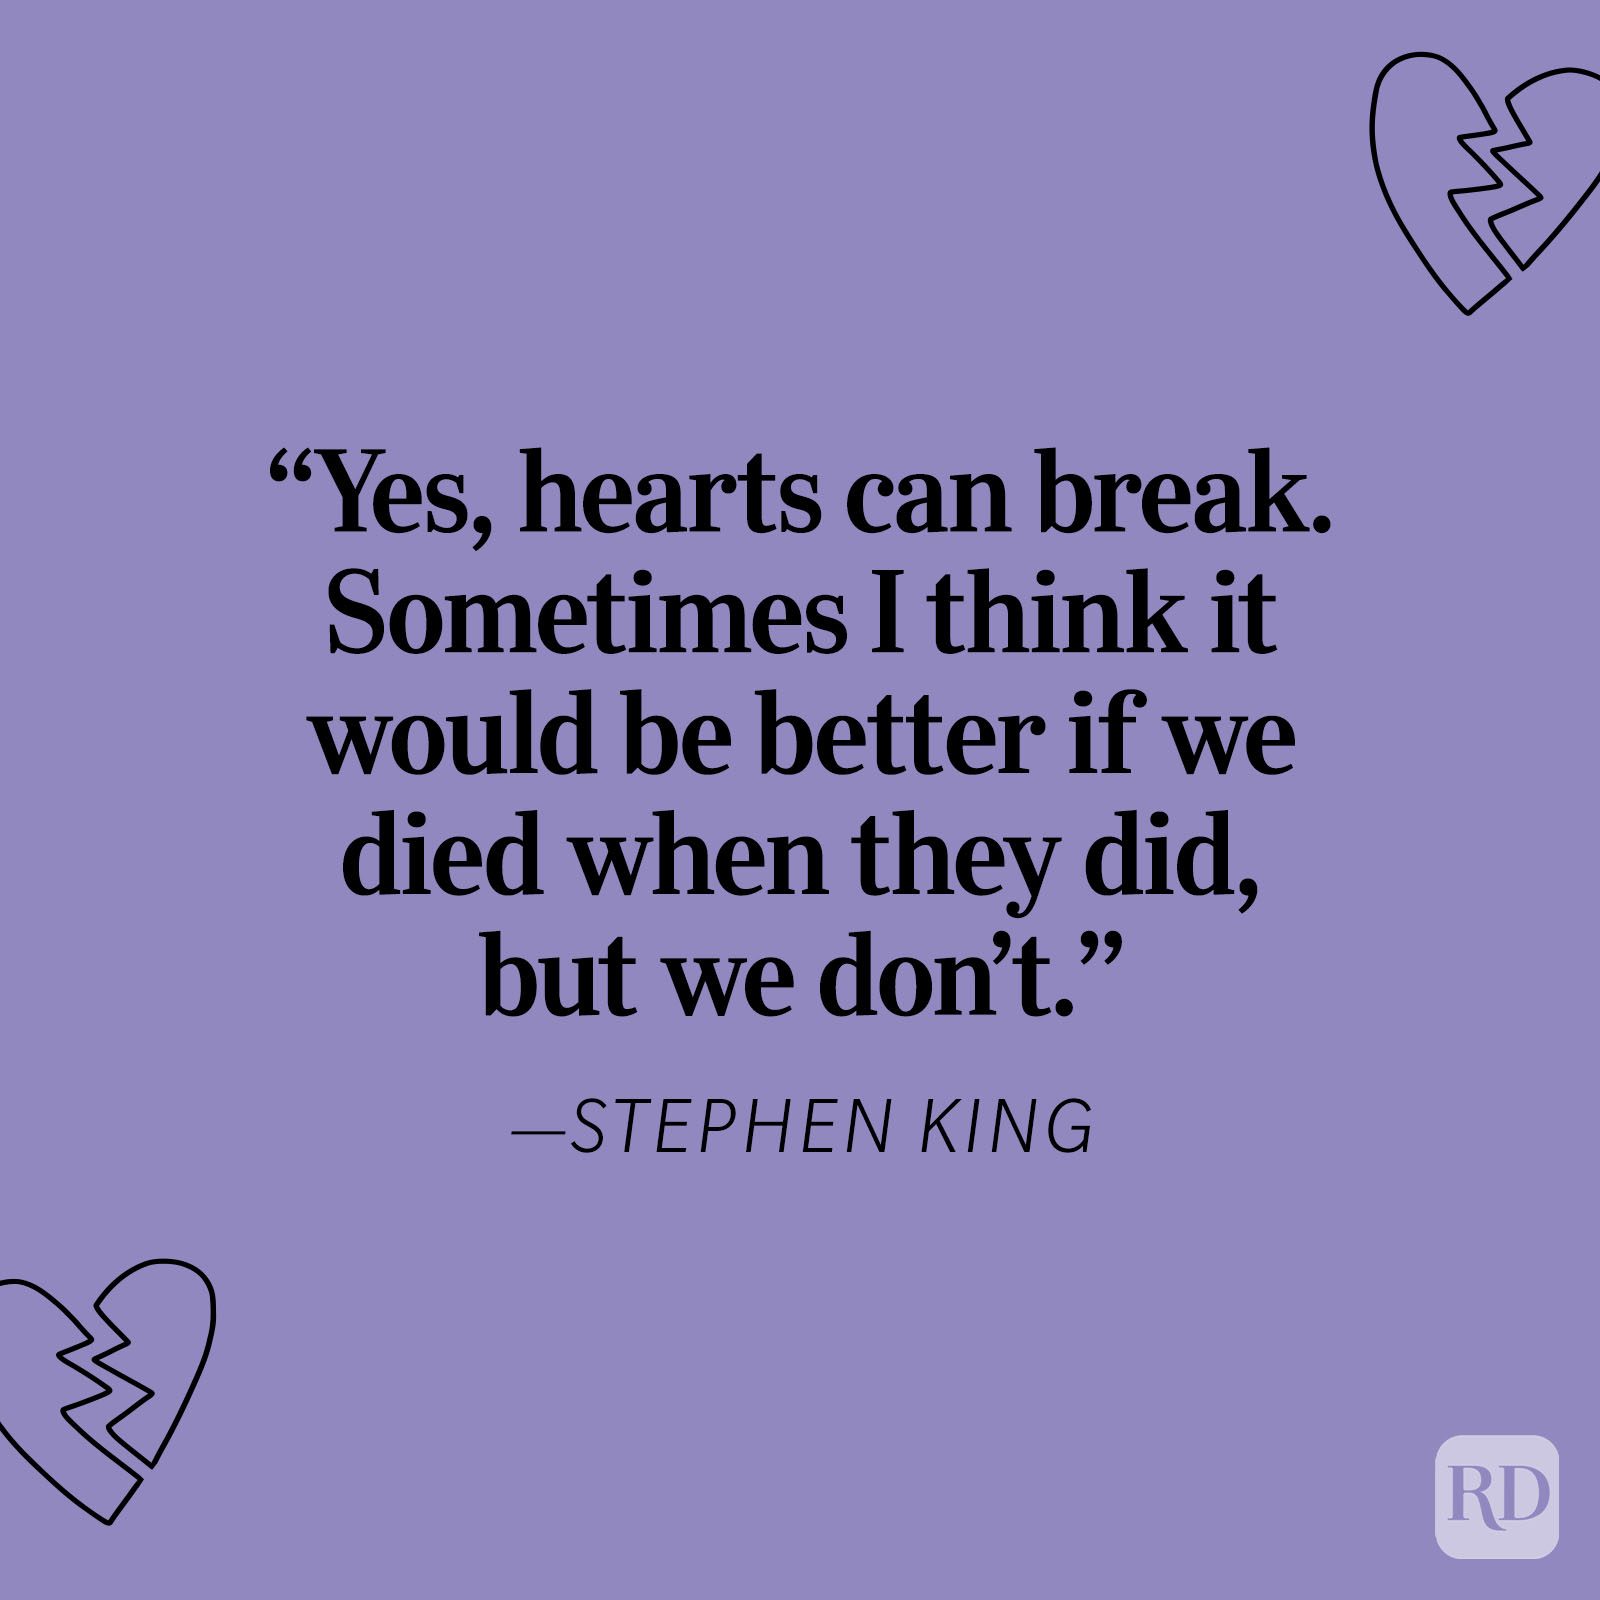 Stephen King Heartbreak Quote